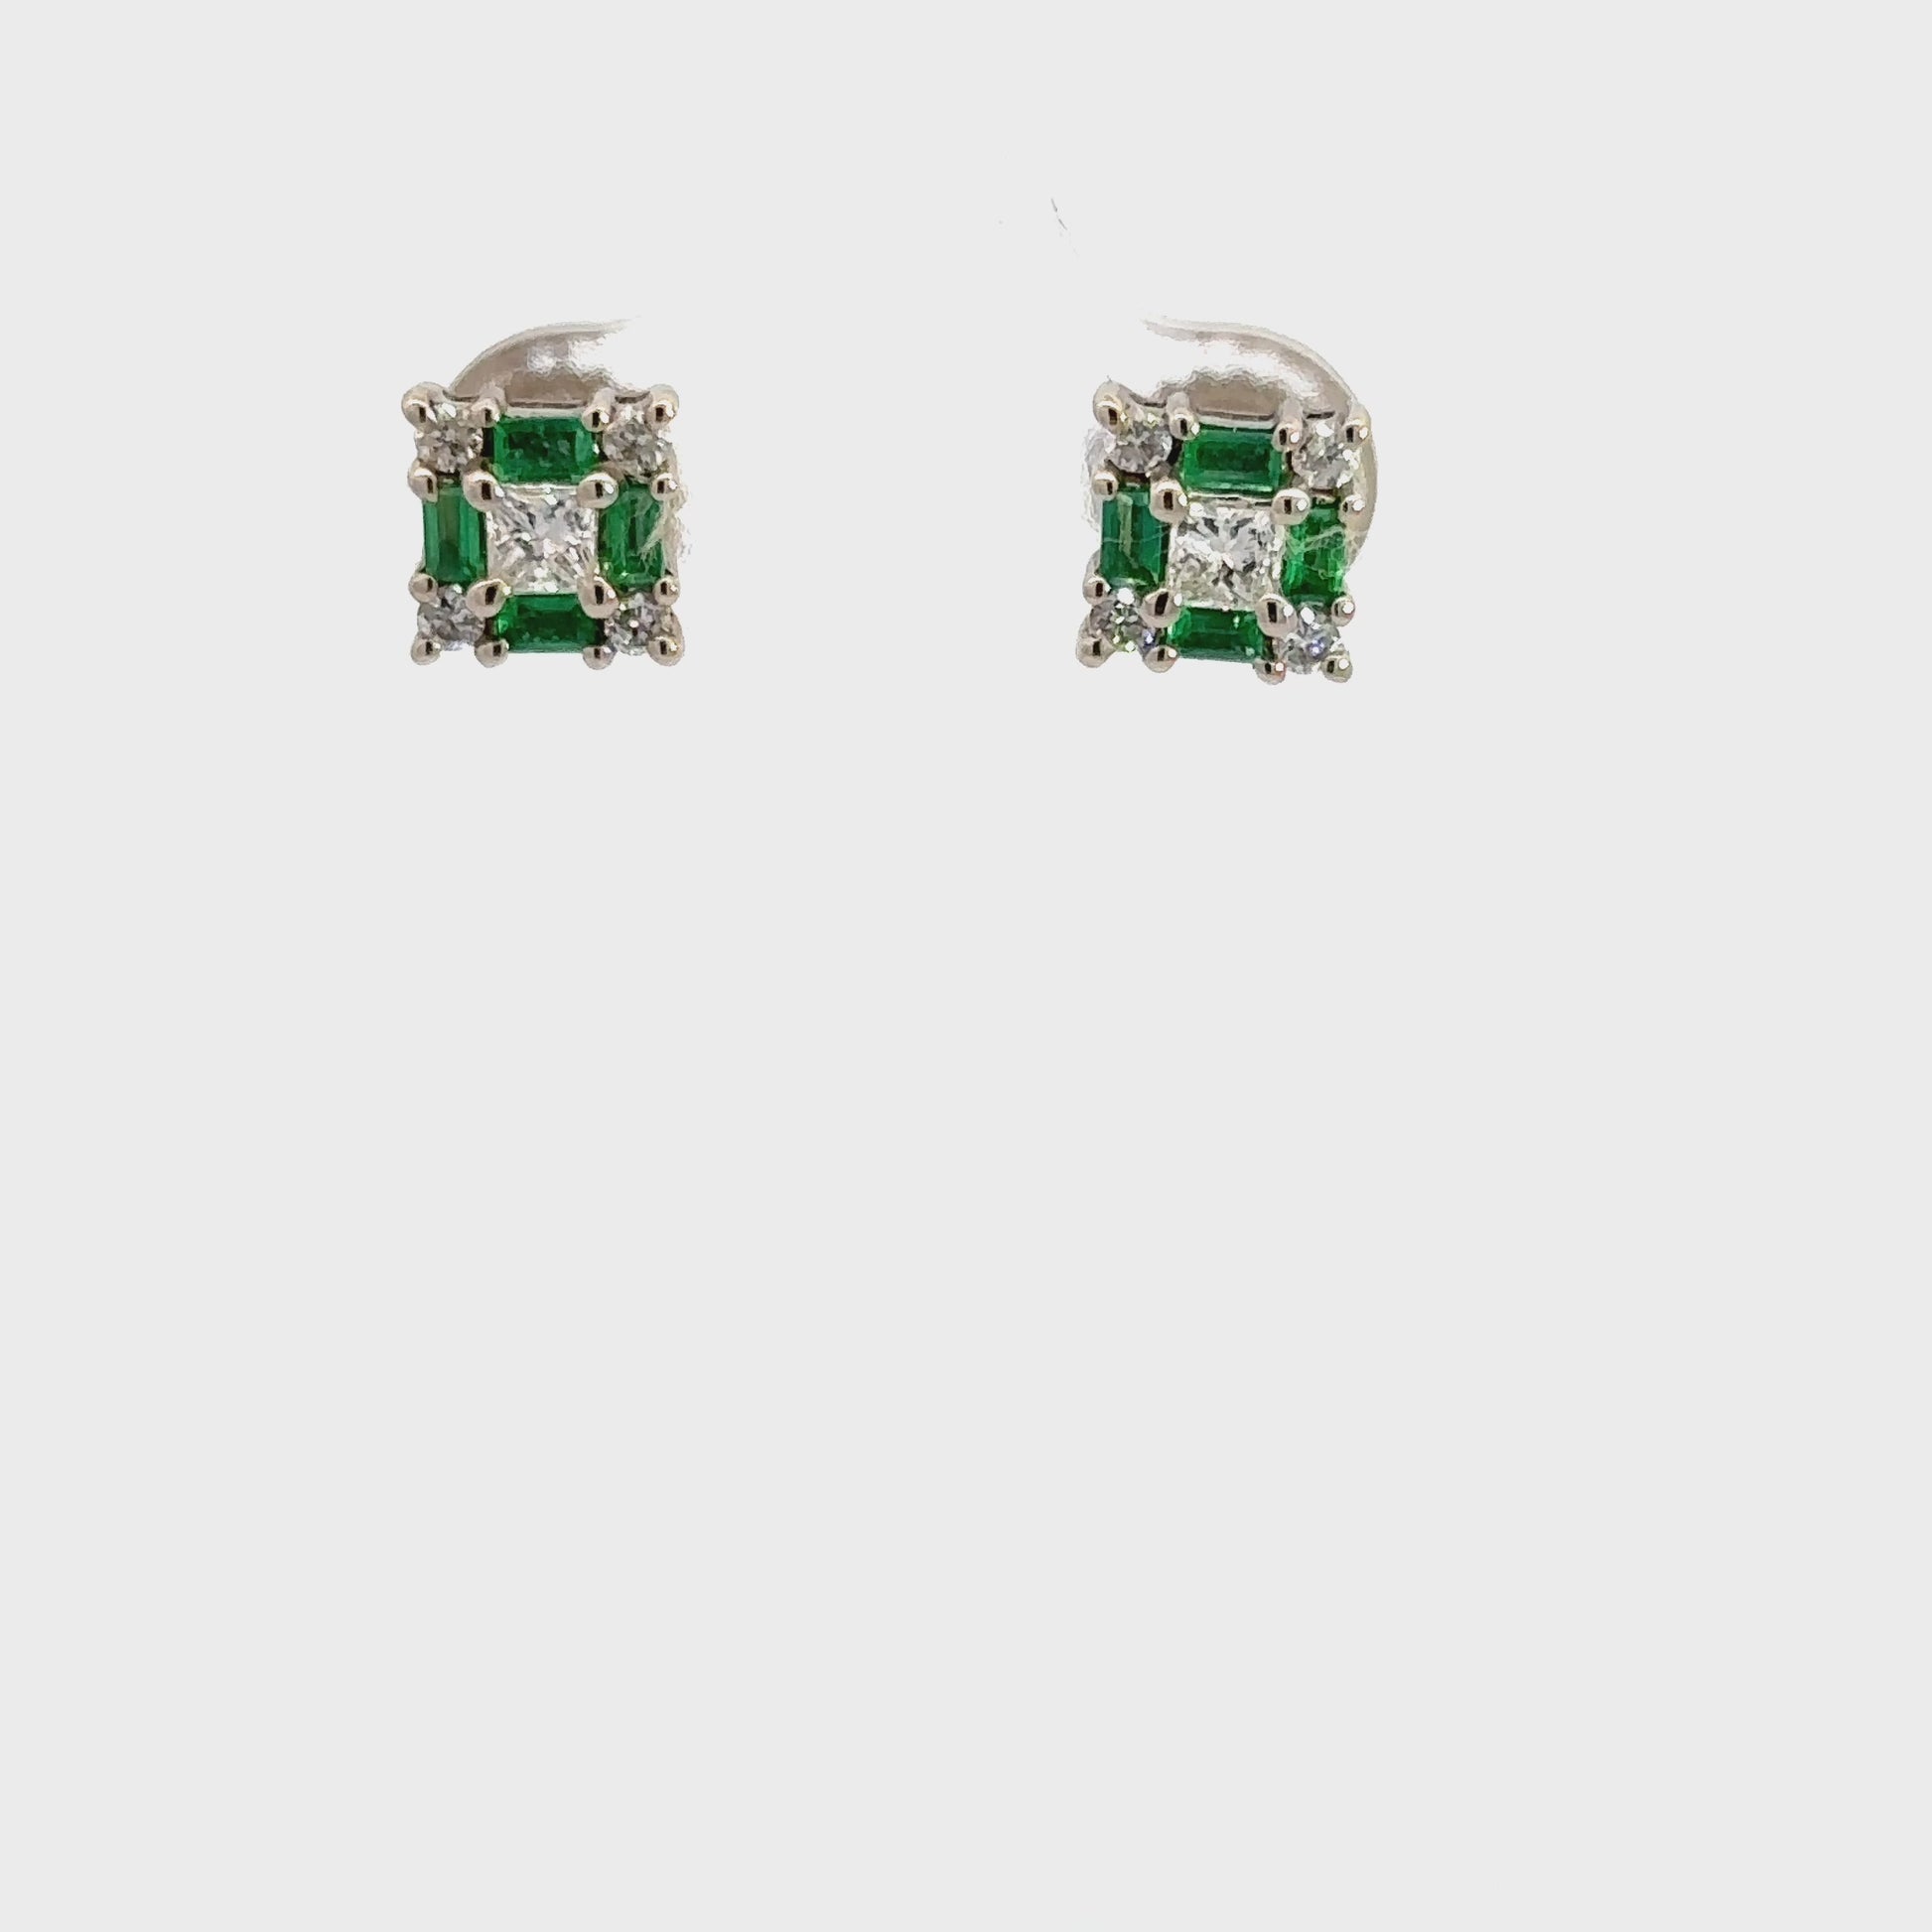 360 Video of pair of emerald + diamond earrings